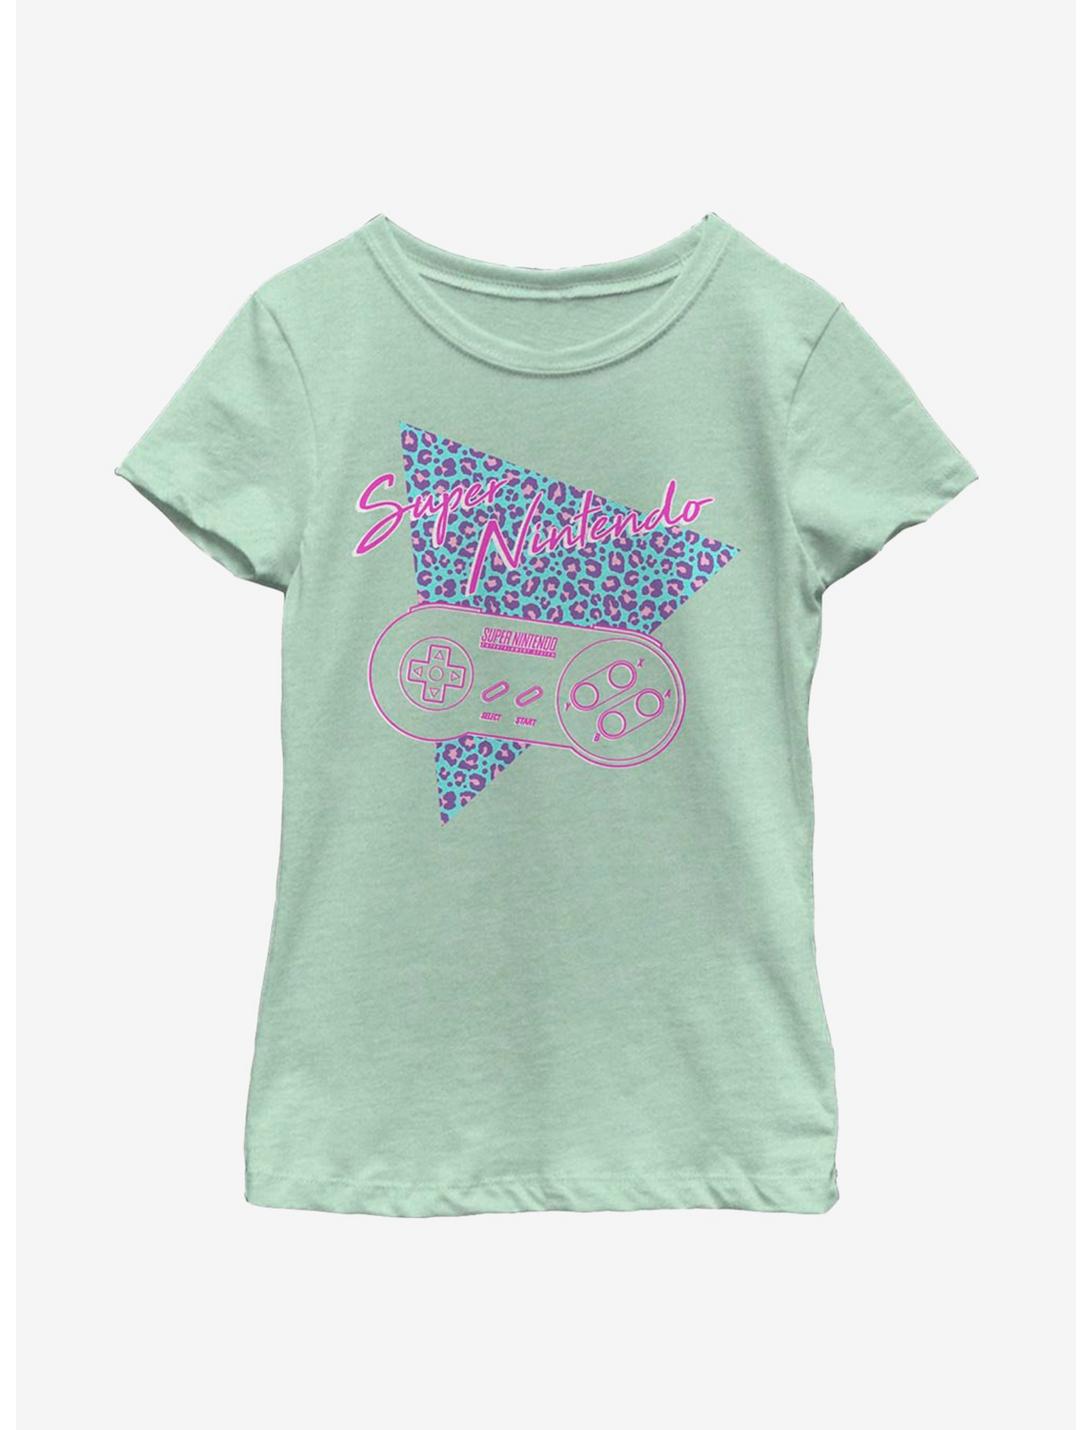 Nintendo Cheetah SNES Youth Girls T-Shirt, MINT, hi-res